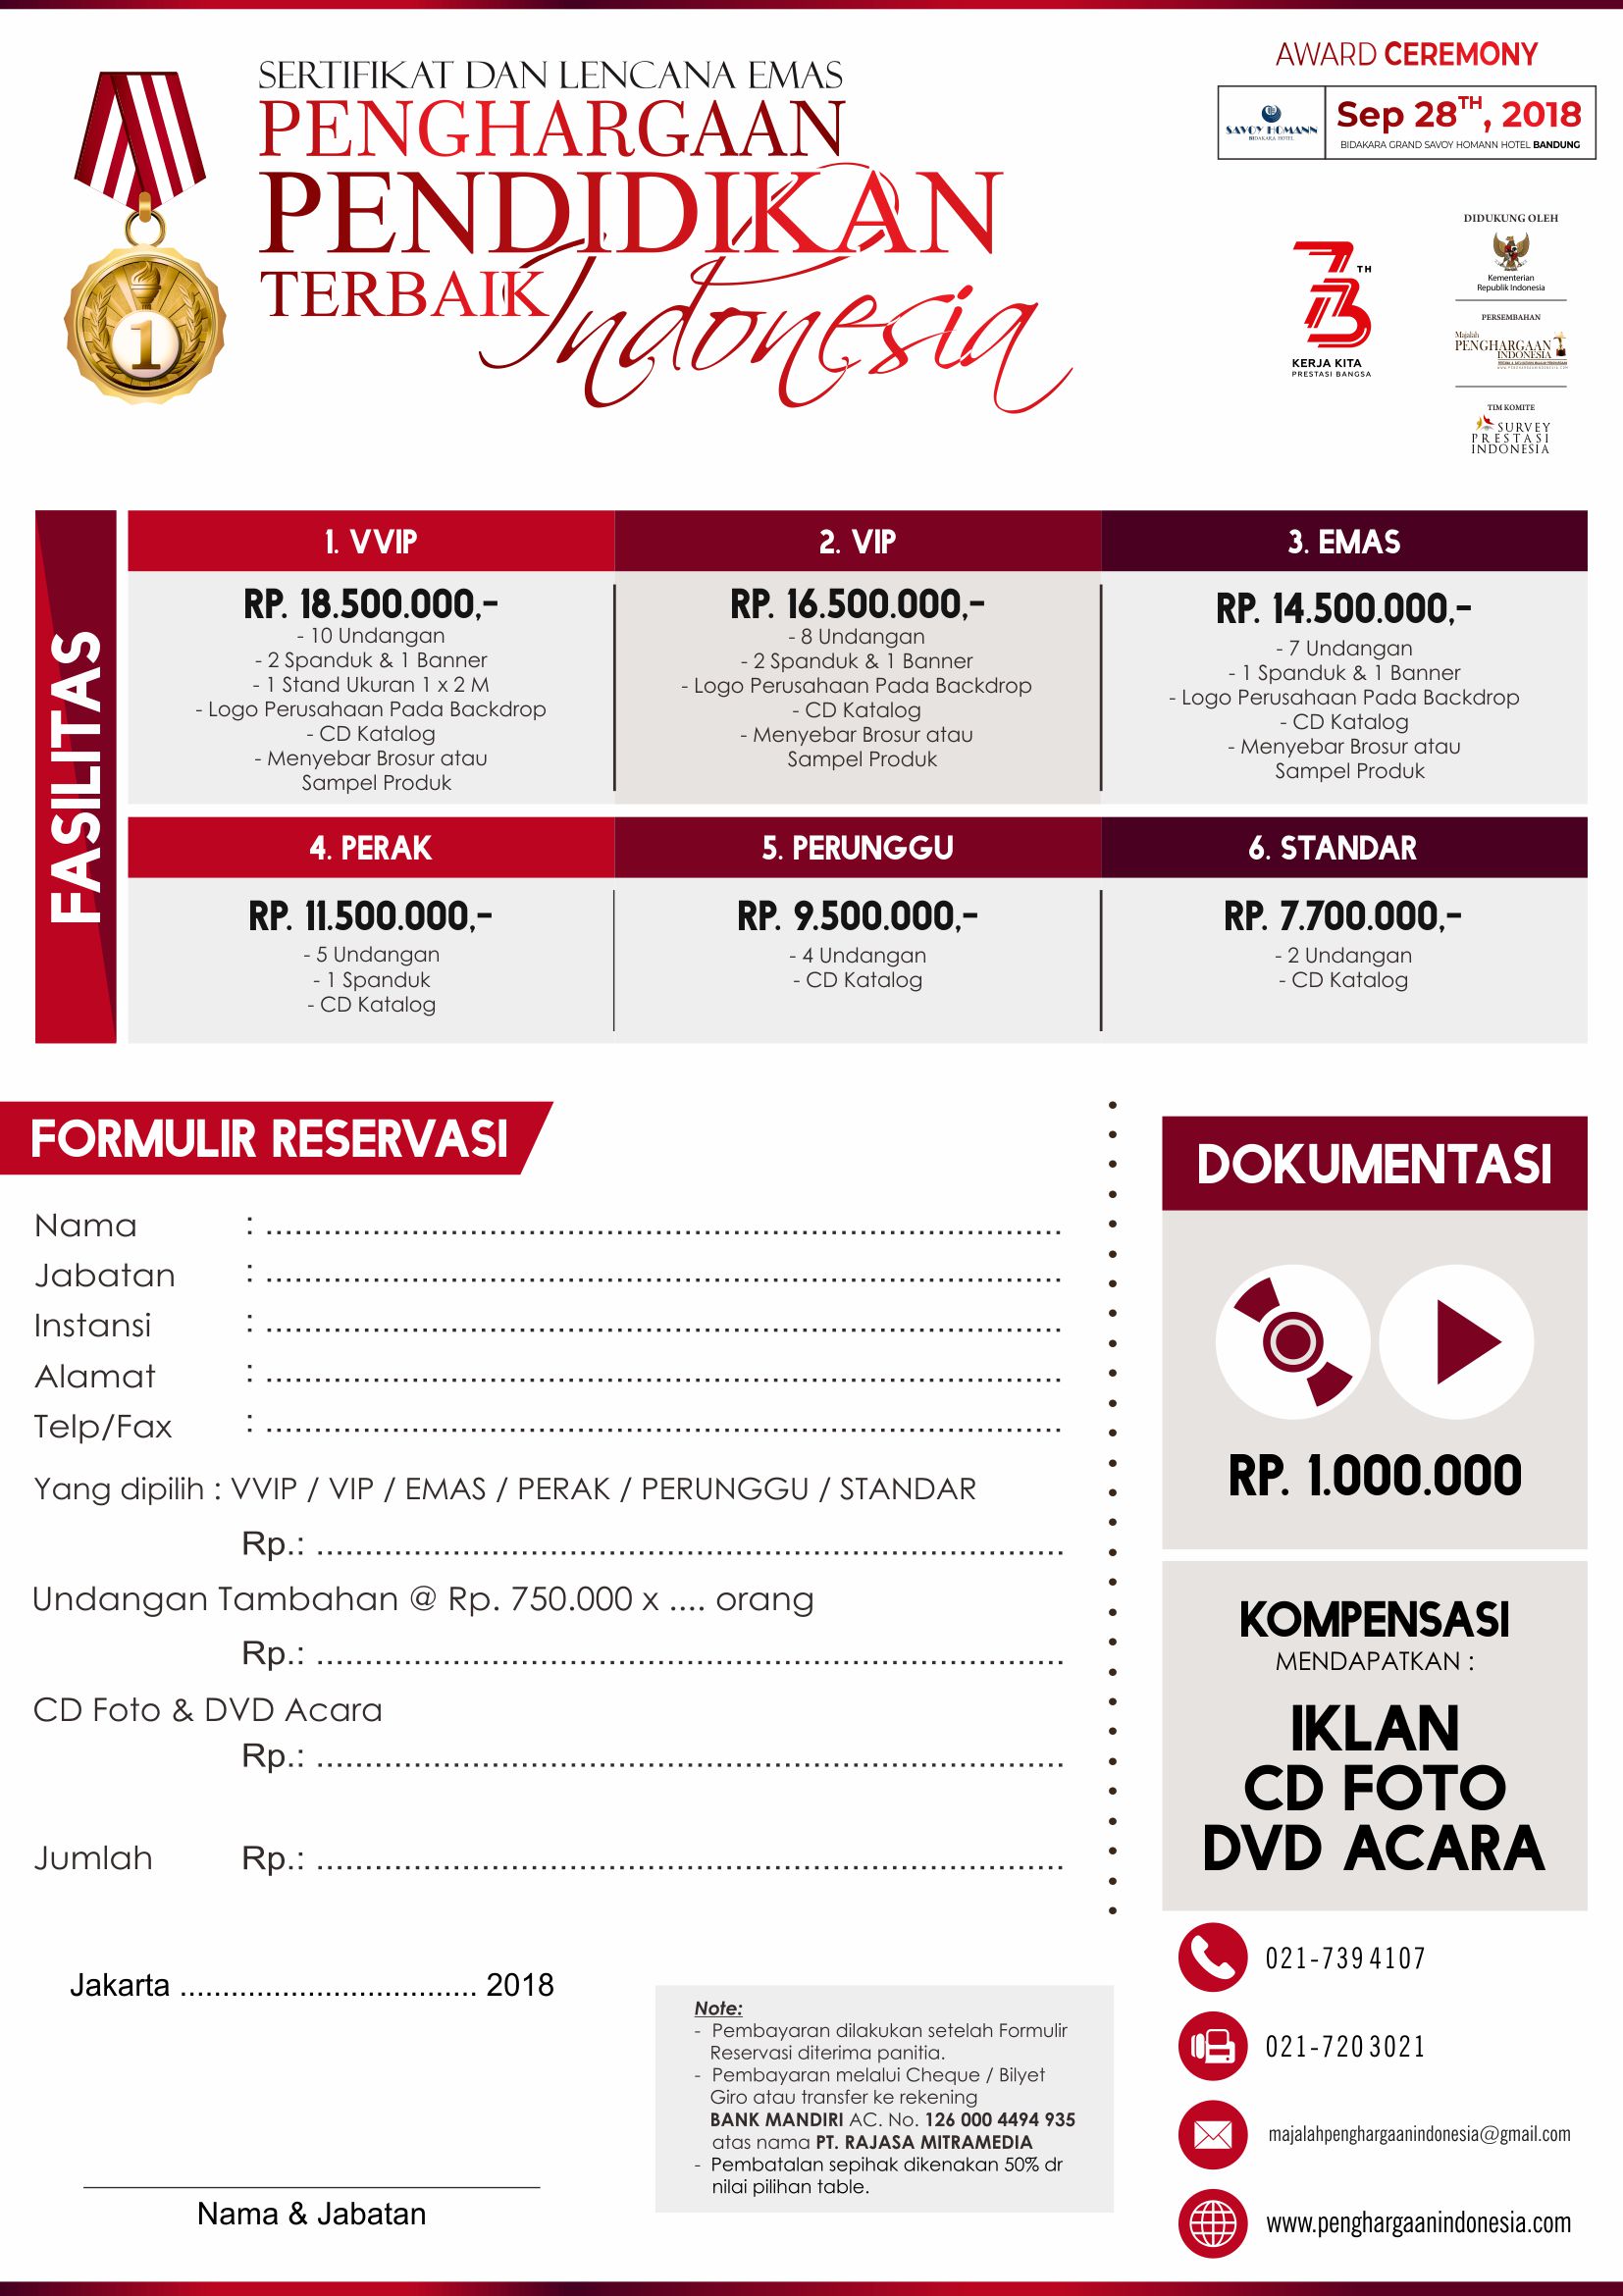 PENGHARGAAN-PENDIDIKAN-TERBAIK-INDONESIA-2018-09-28-RESERVATION-II.jpg